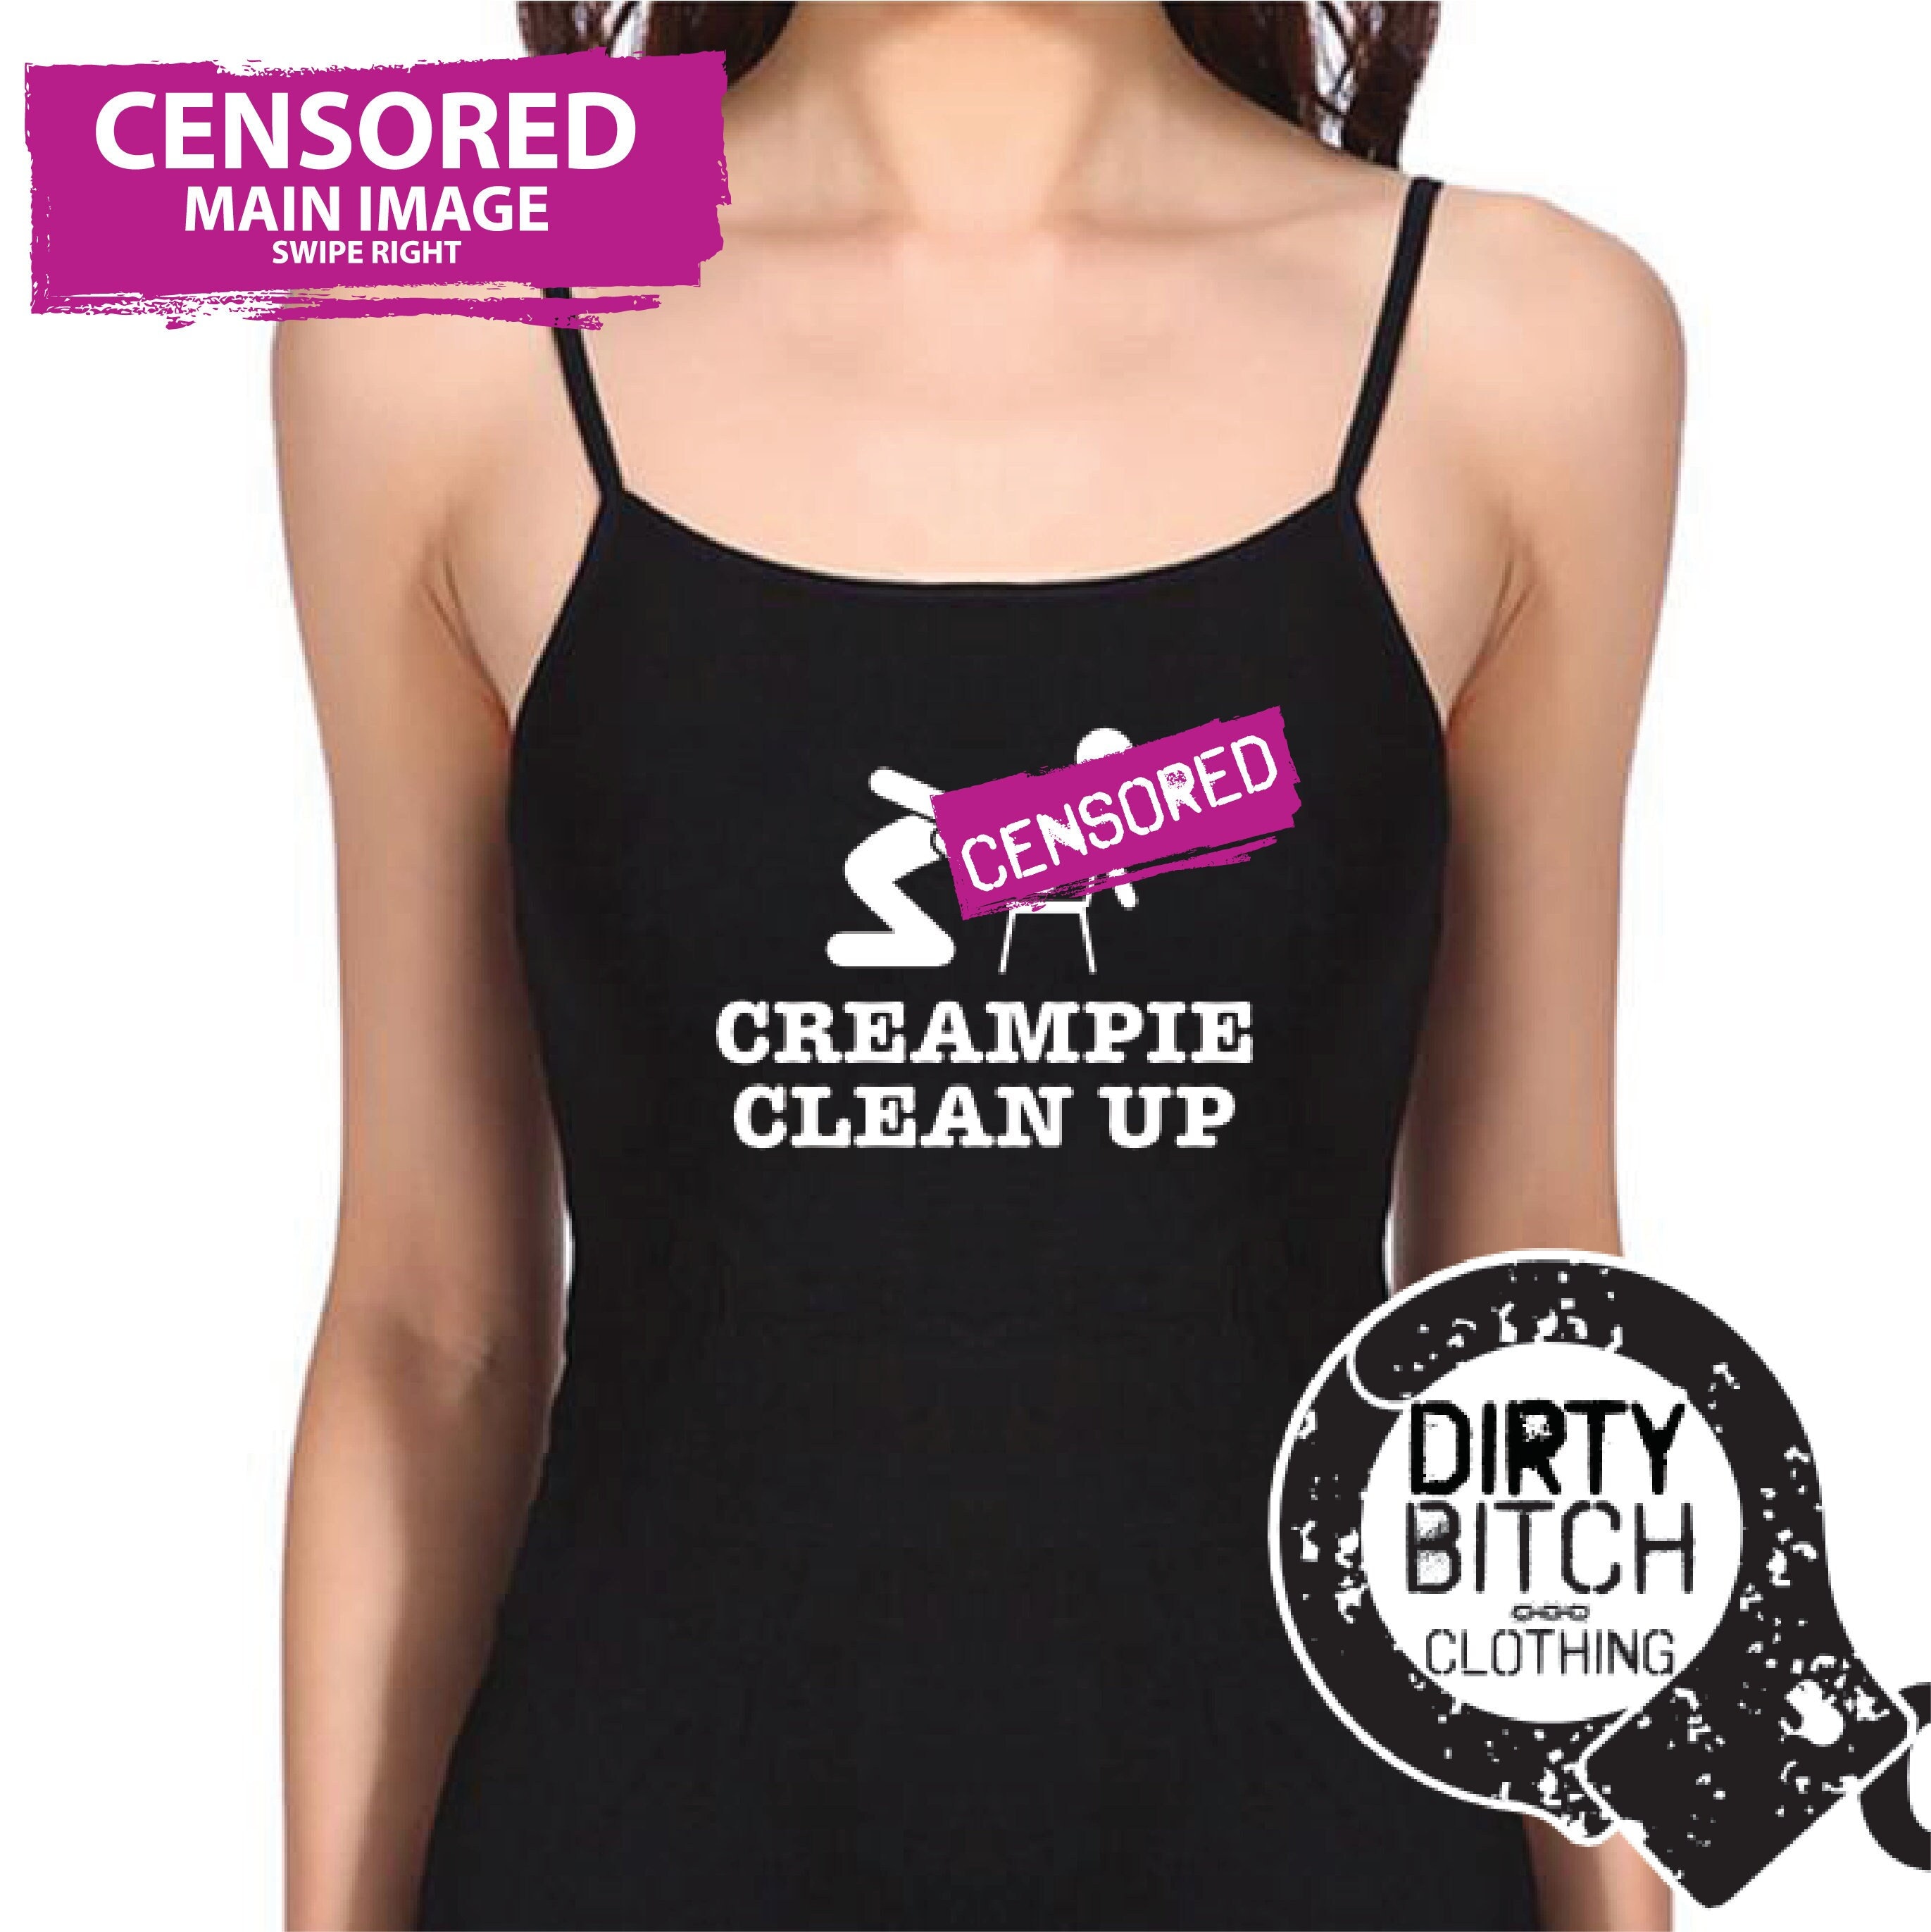 Creampie Clean up Adult Vest Top Clothing Fetish Bdsm image